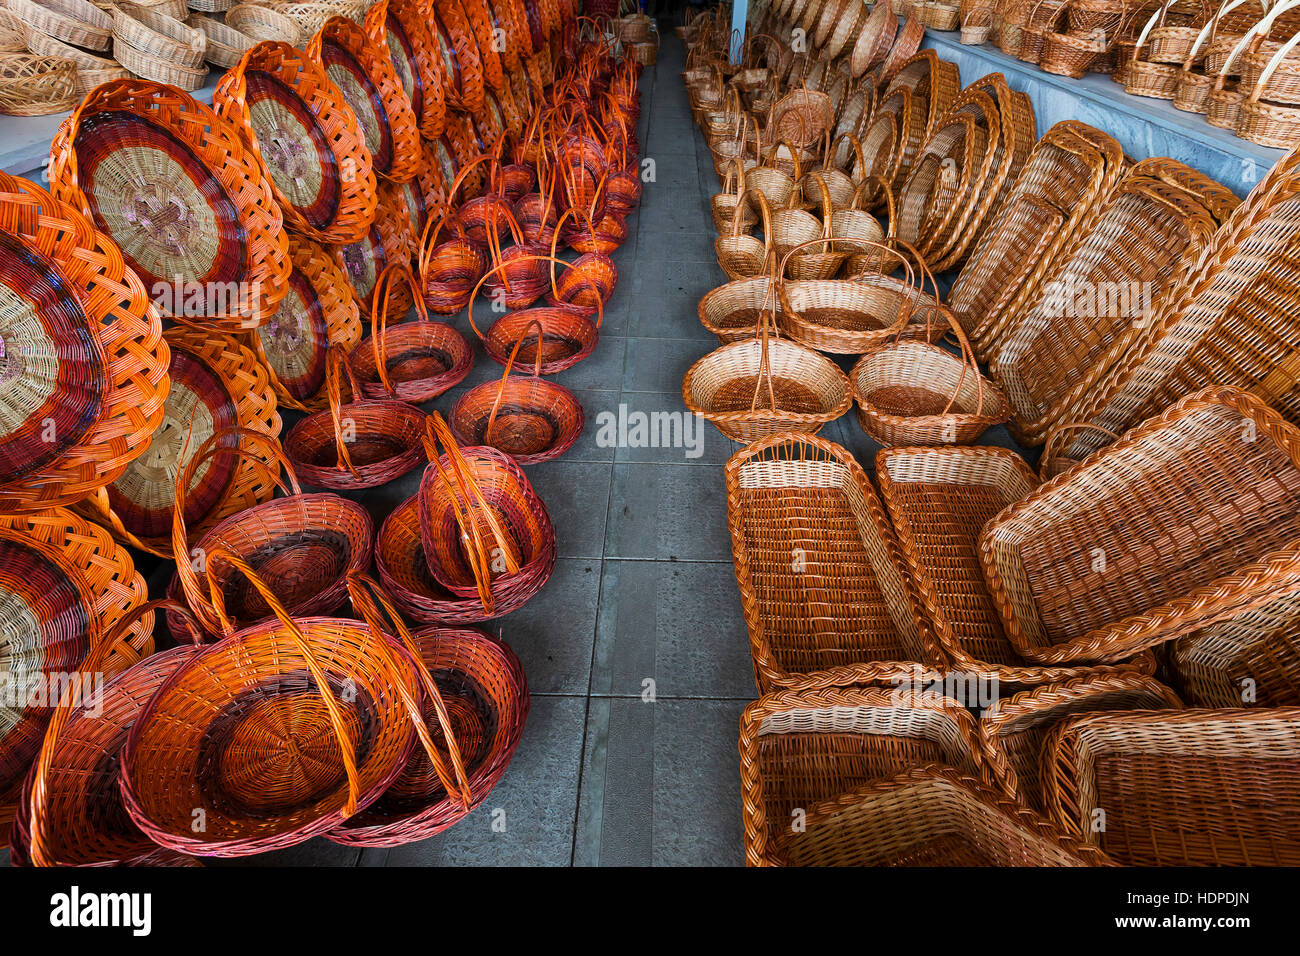 Colorful baskets in rows, Tashkent, Uzbekistan Stock Photo